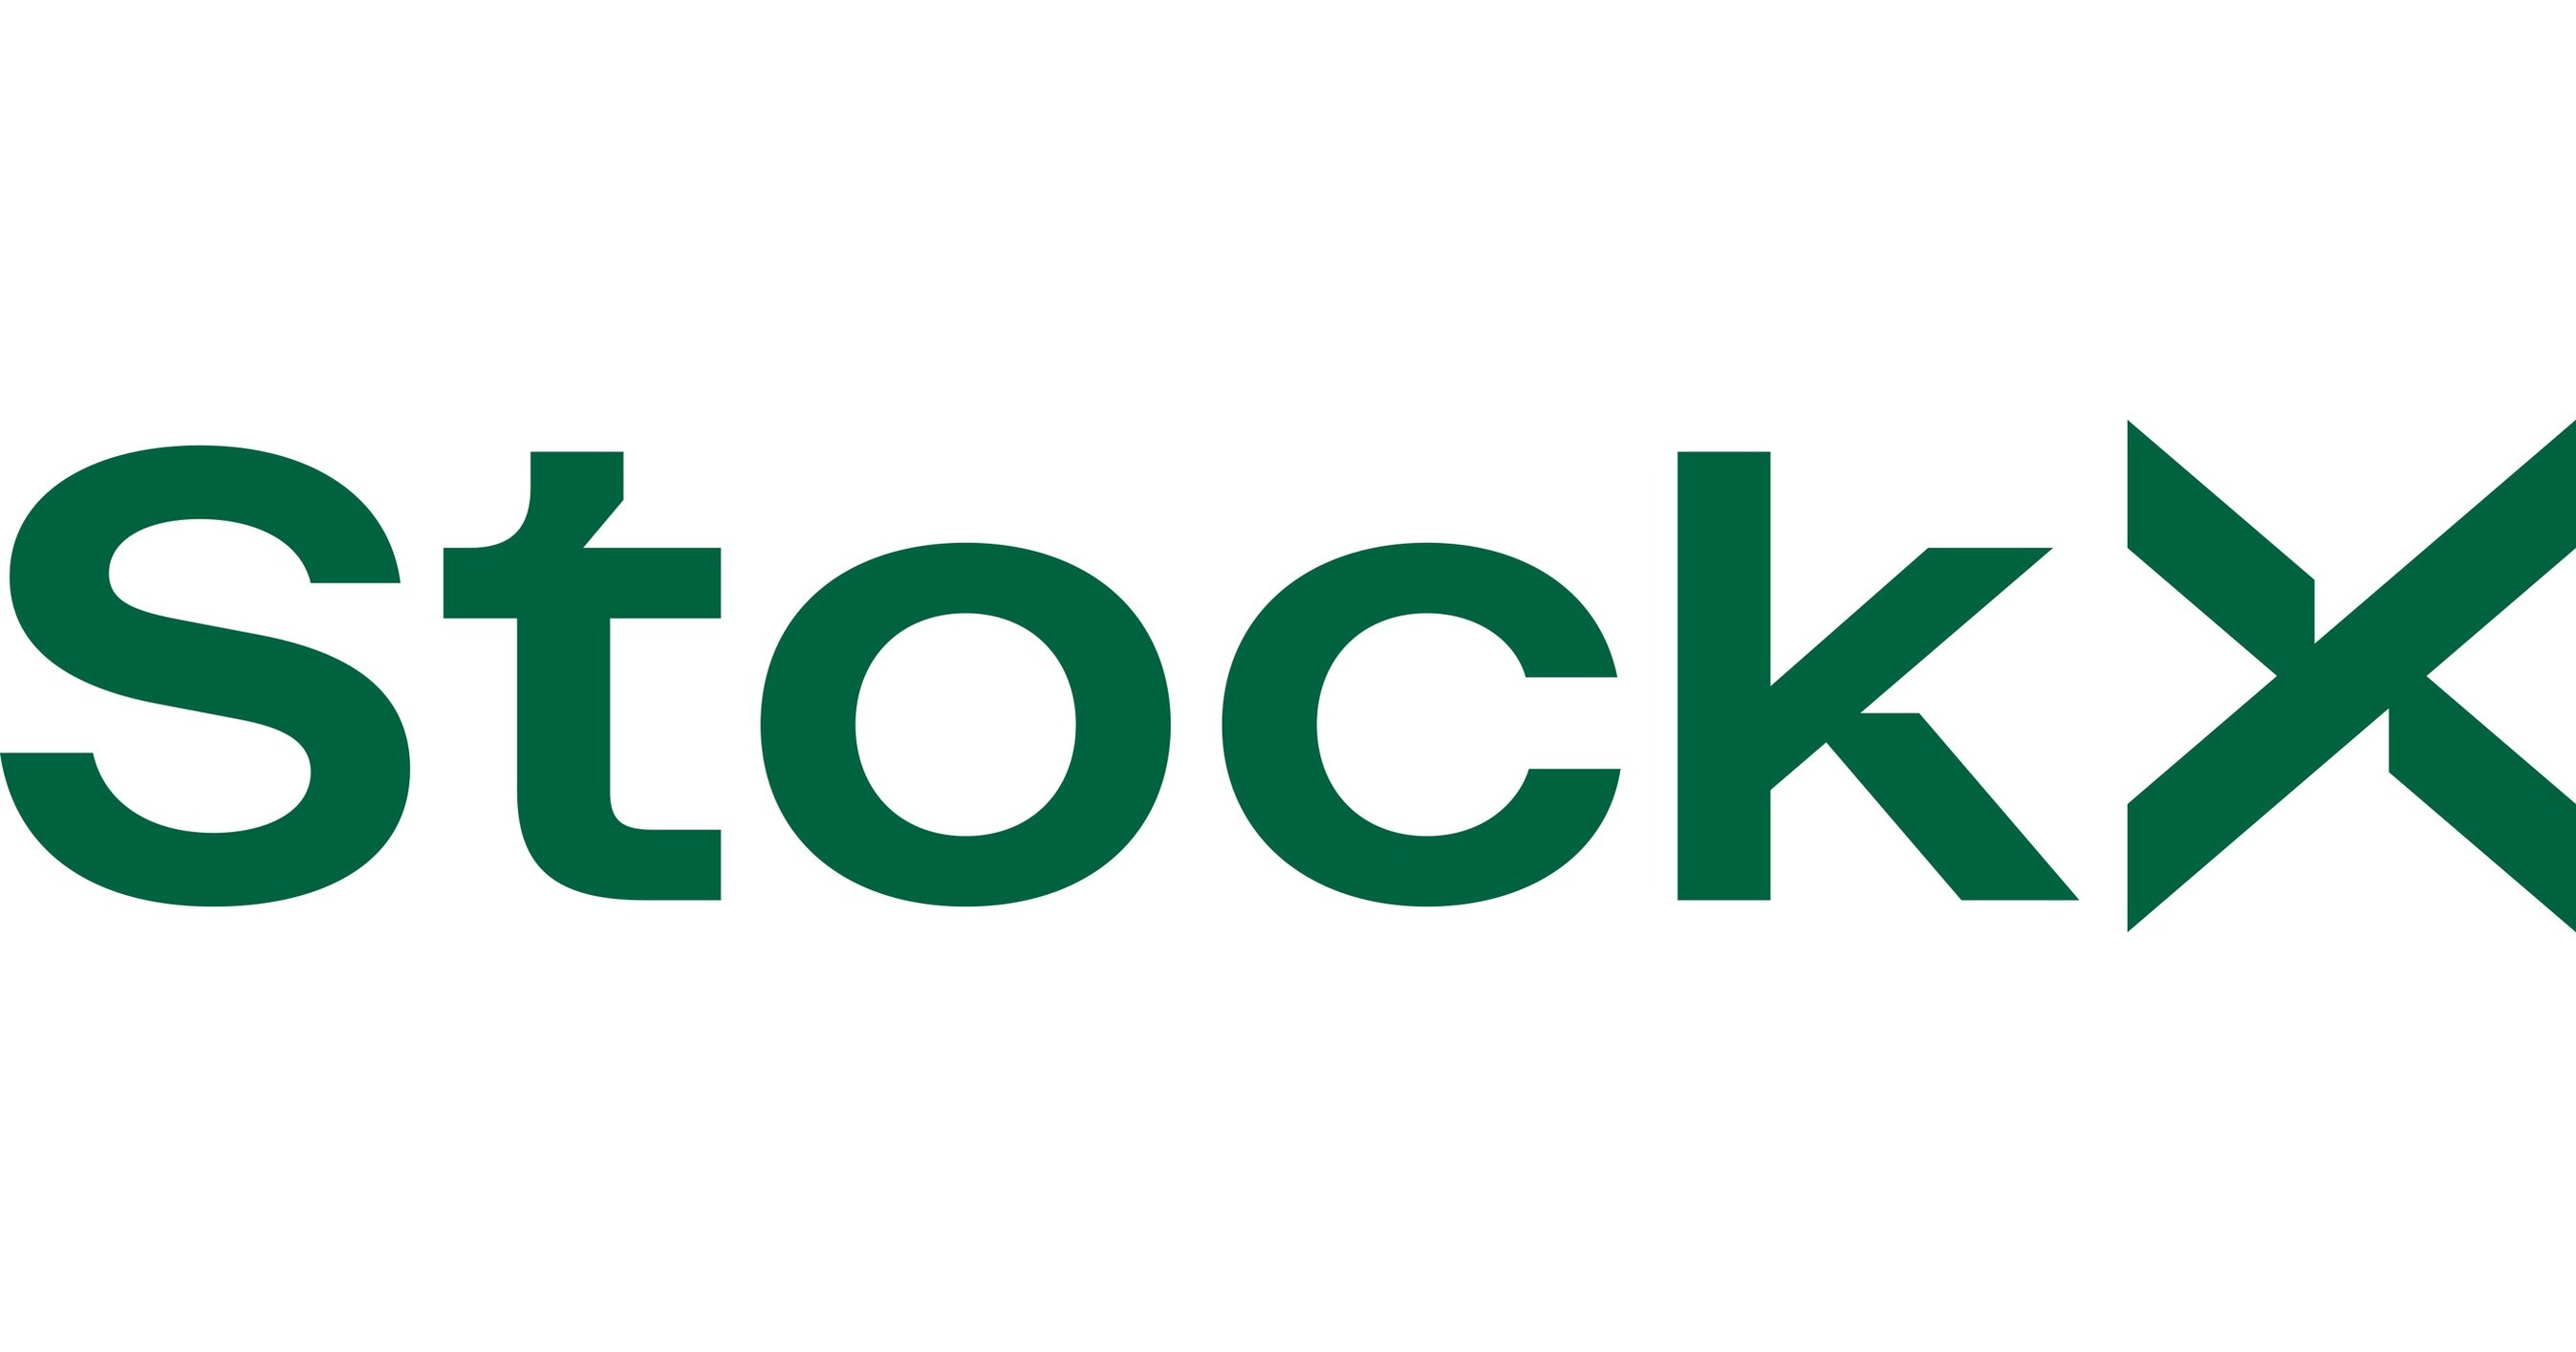 Verification - StockX